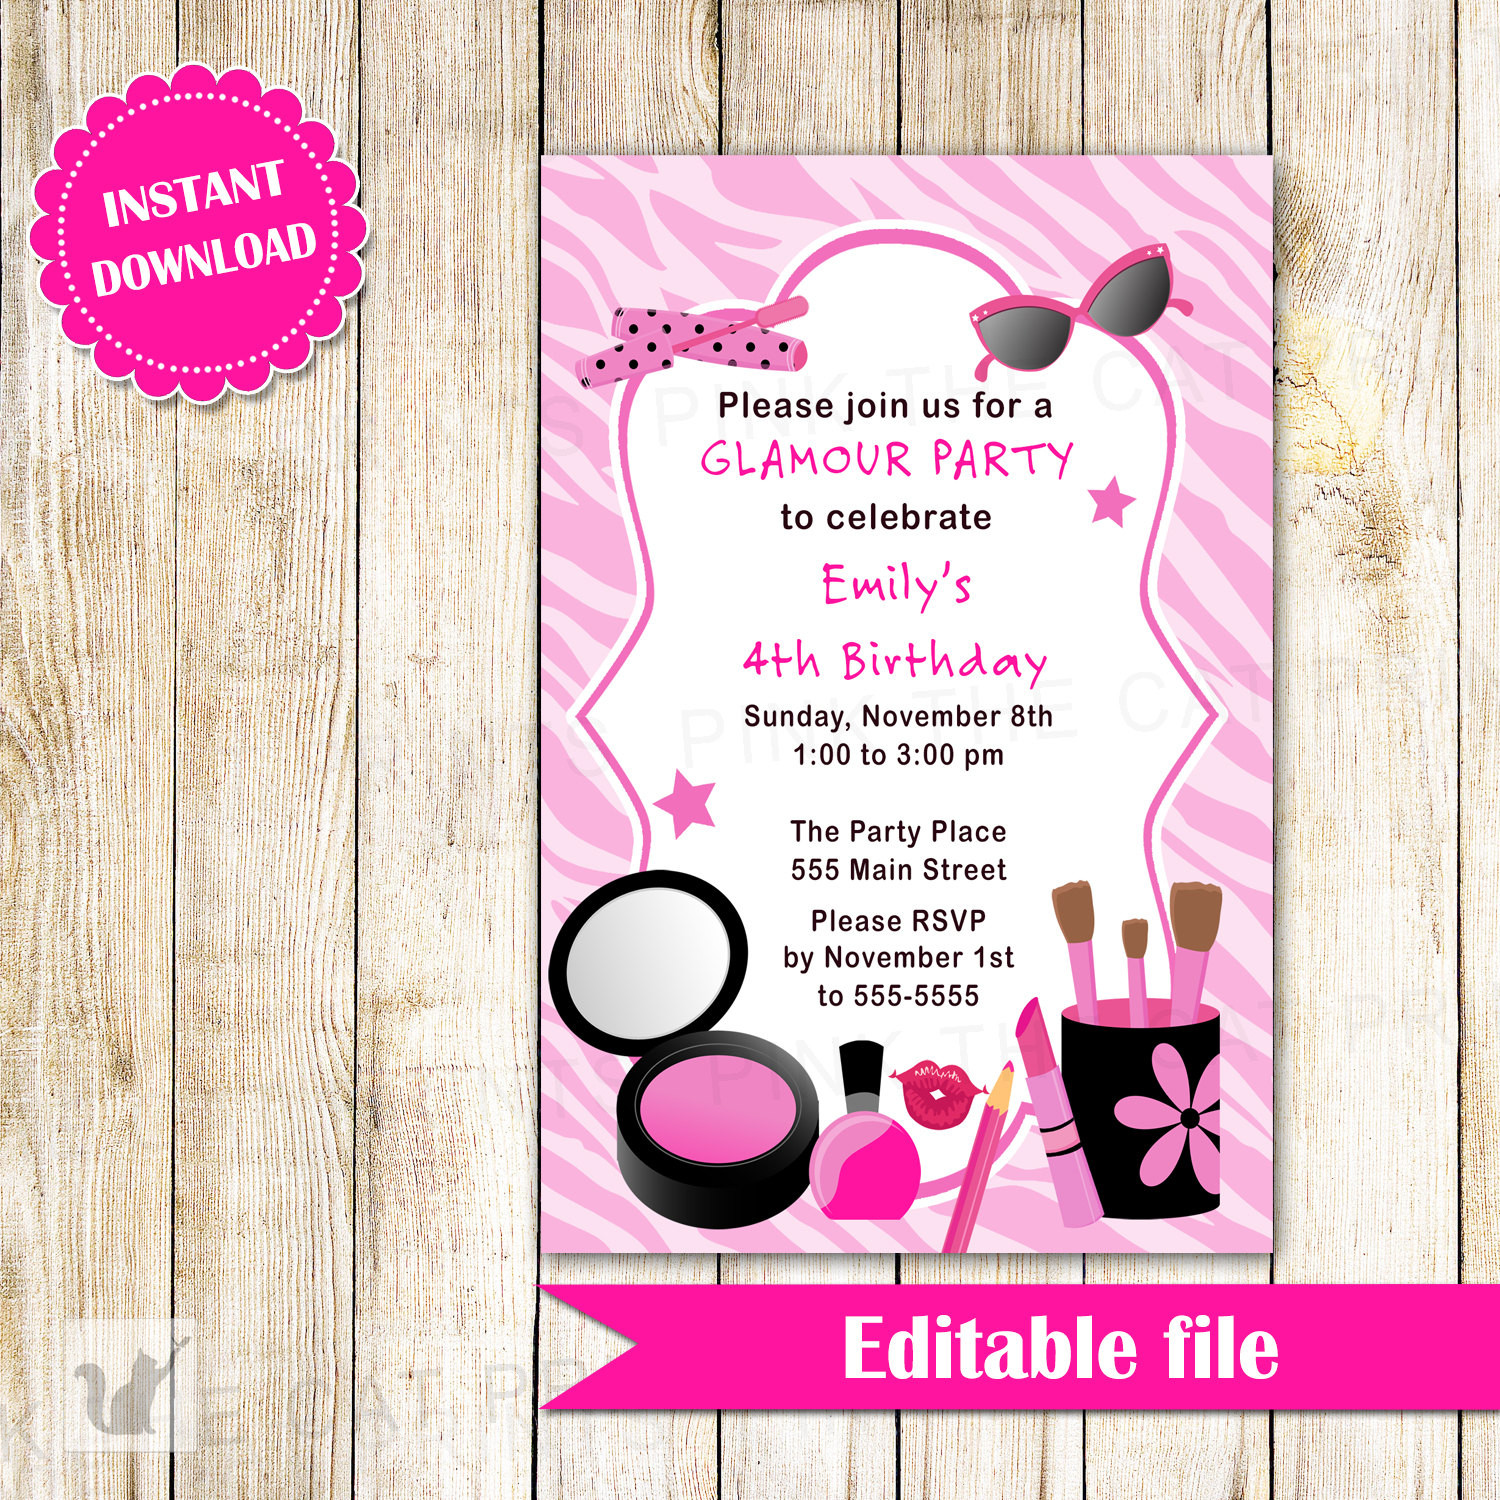 Girls Birthday Party Invite
 Glamour Invitation Girl Birthday Party Makeup Invite